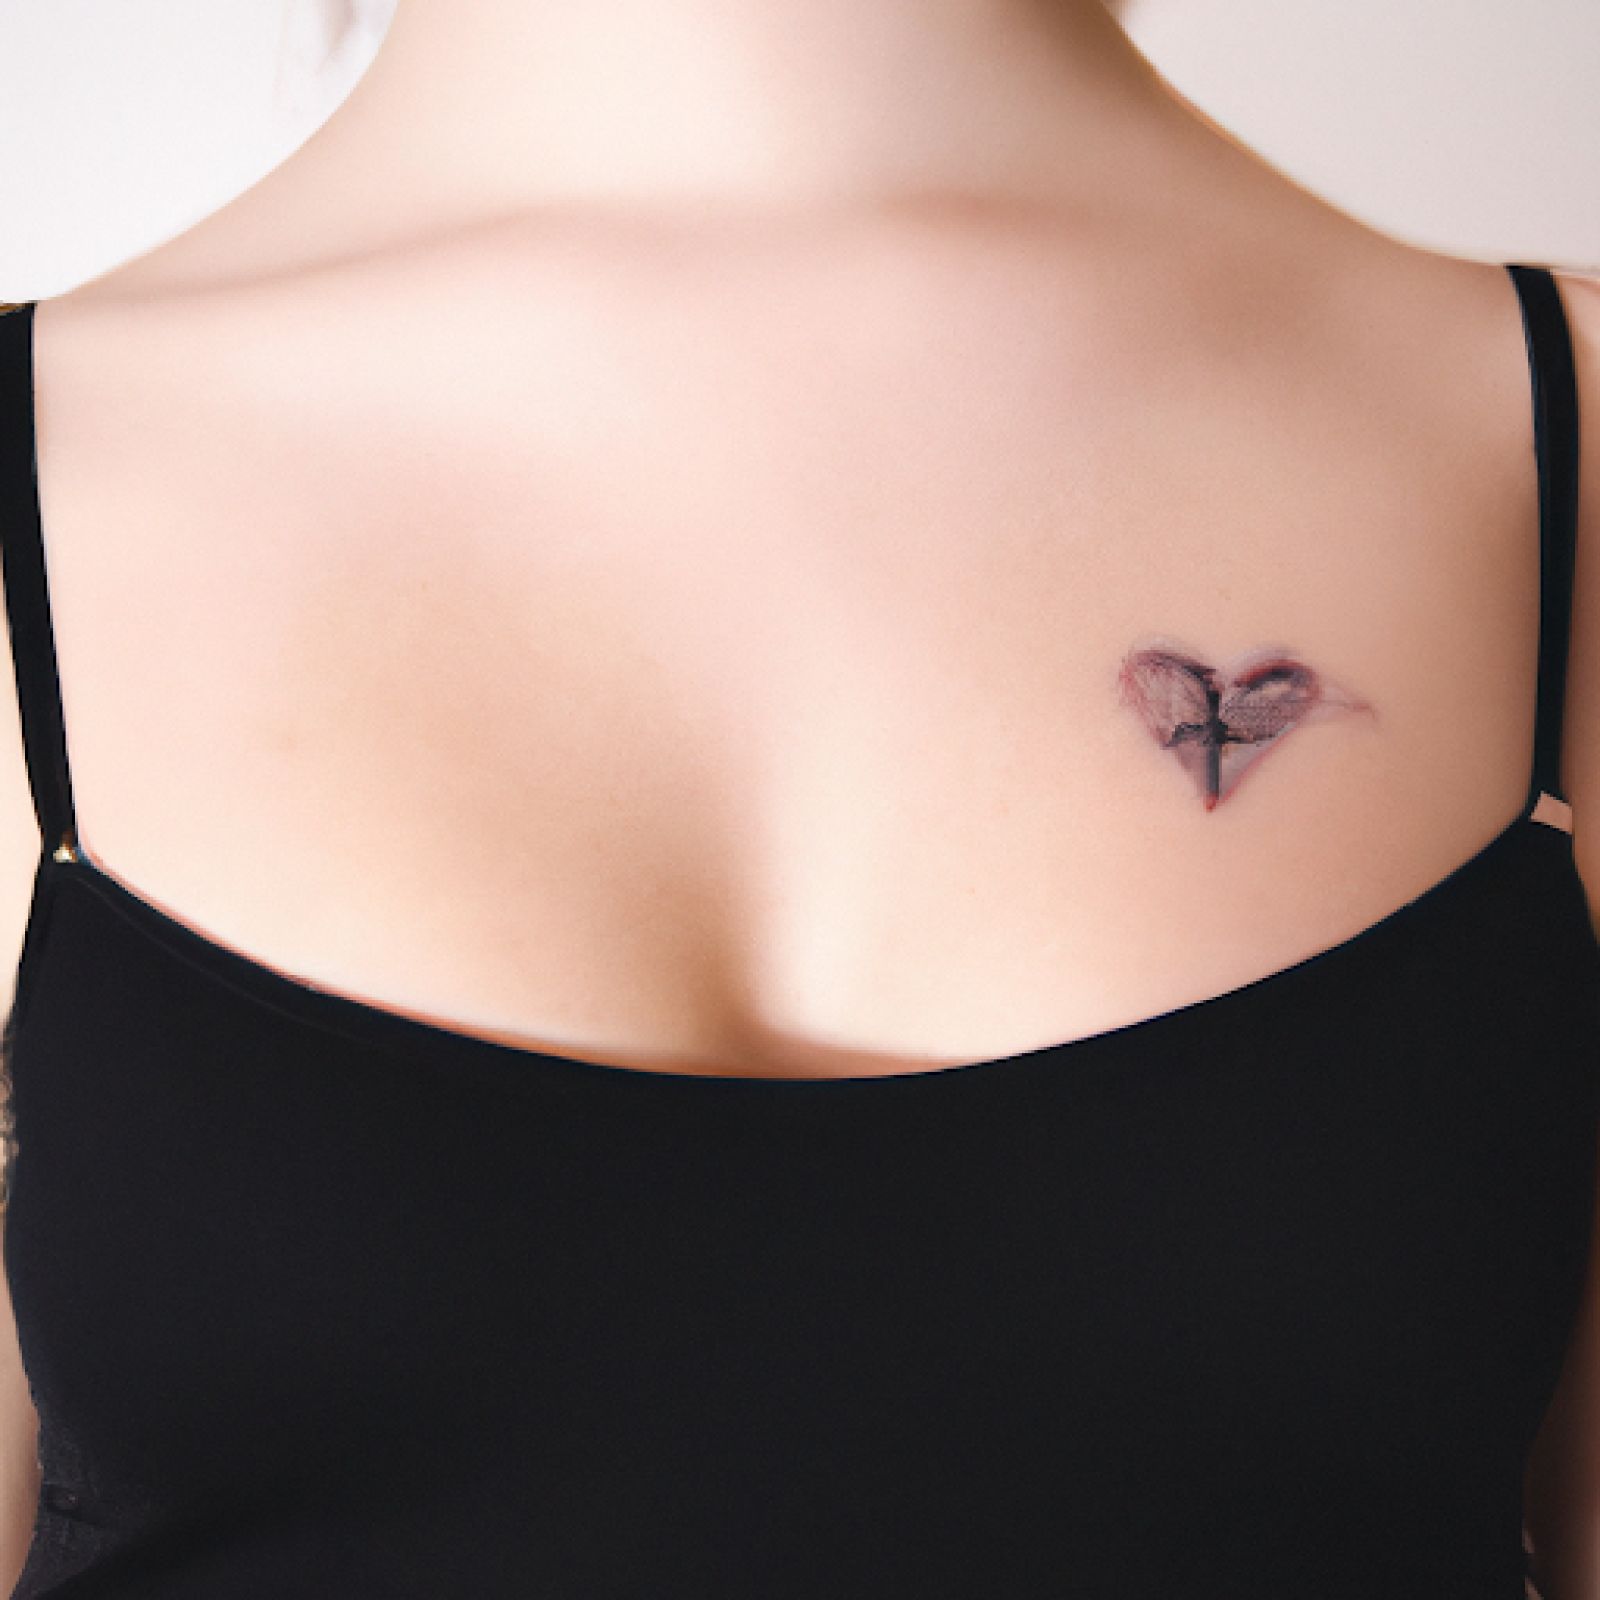 Broken heart tattoo on sternum for women